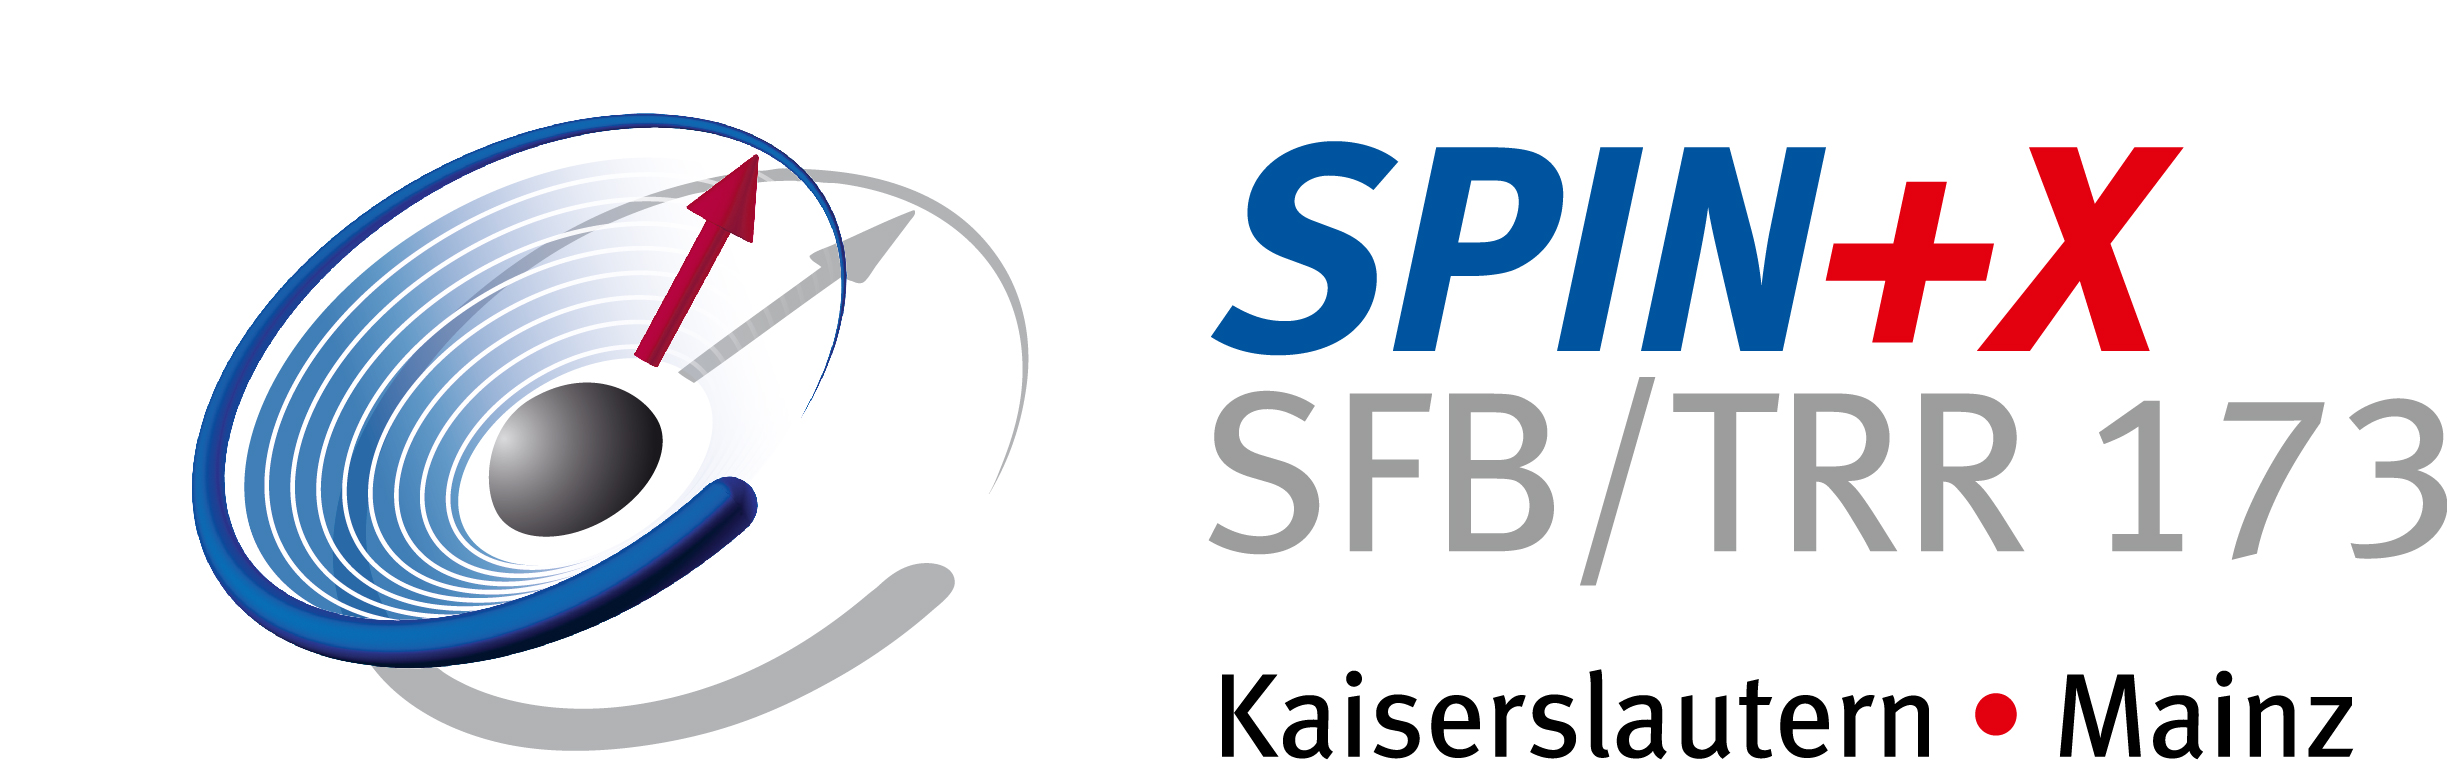 mitp-Logo-Partner of SPICE - Spin Phenomena Interdisciplinary Center Johannes Gutenberg Universität - JGU Mainz - Spintronics